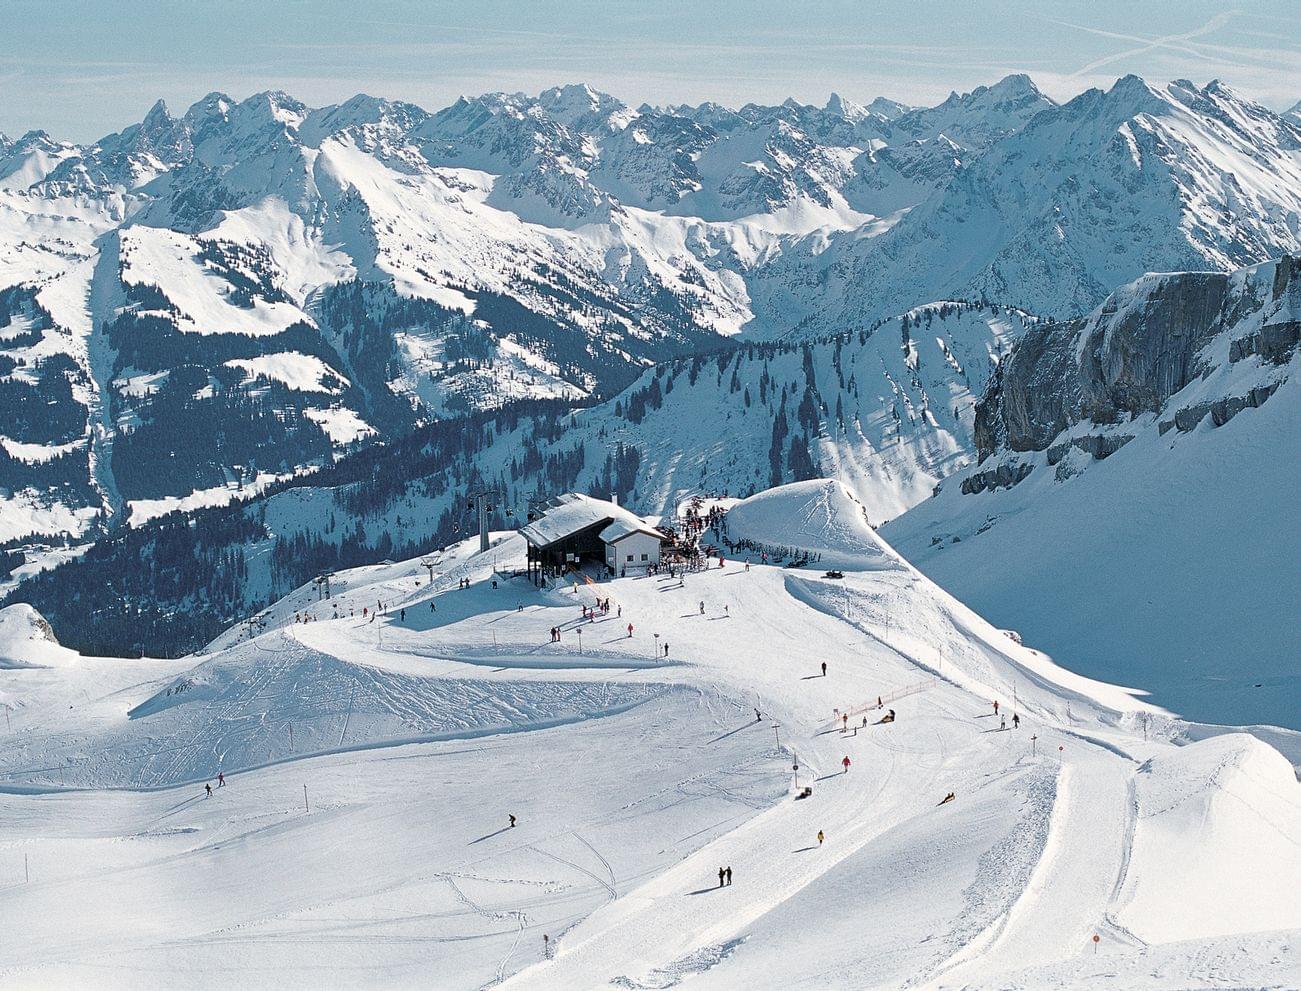 The Kleinwalsertal ski resort in Austria